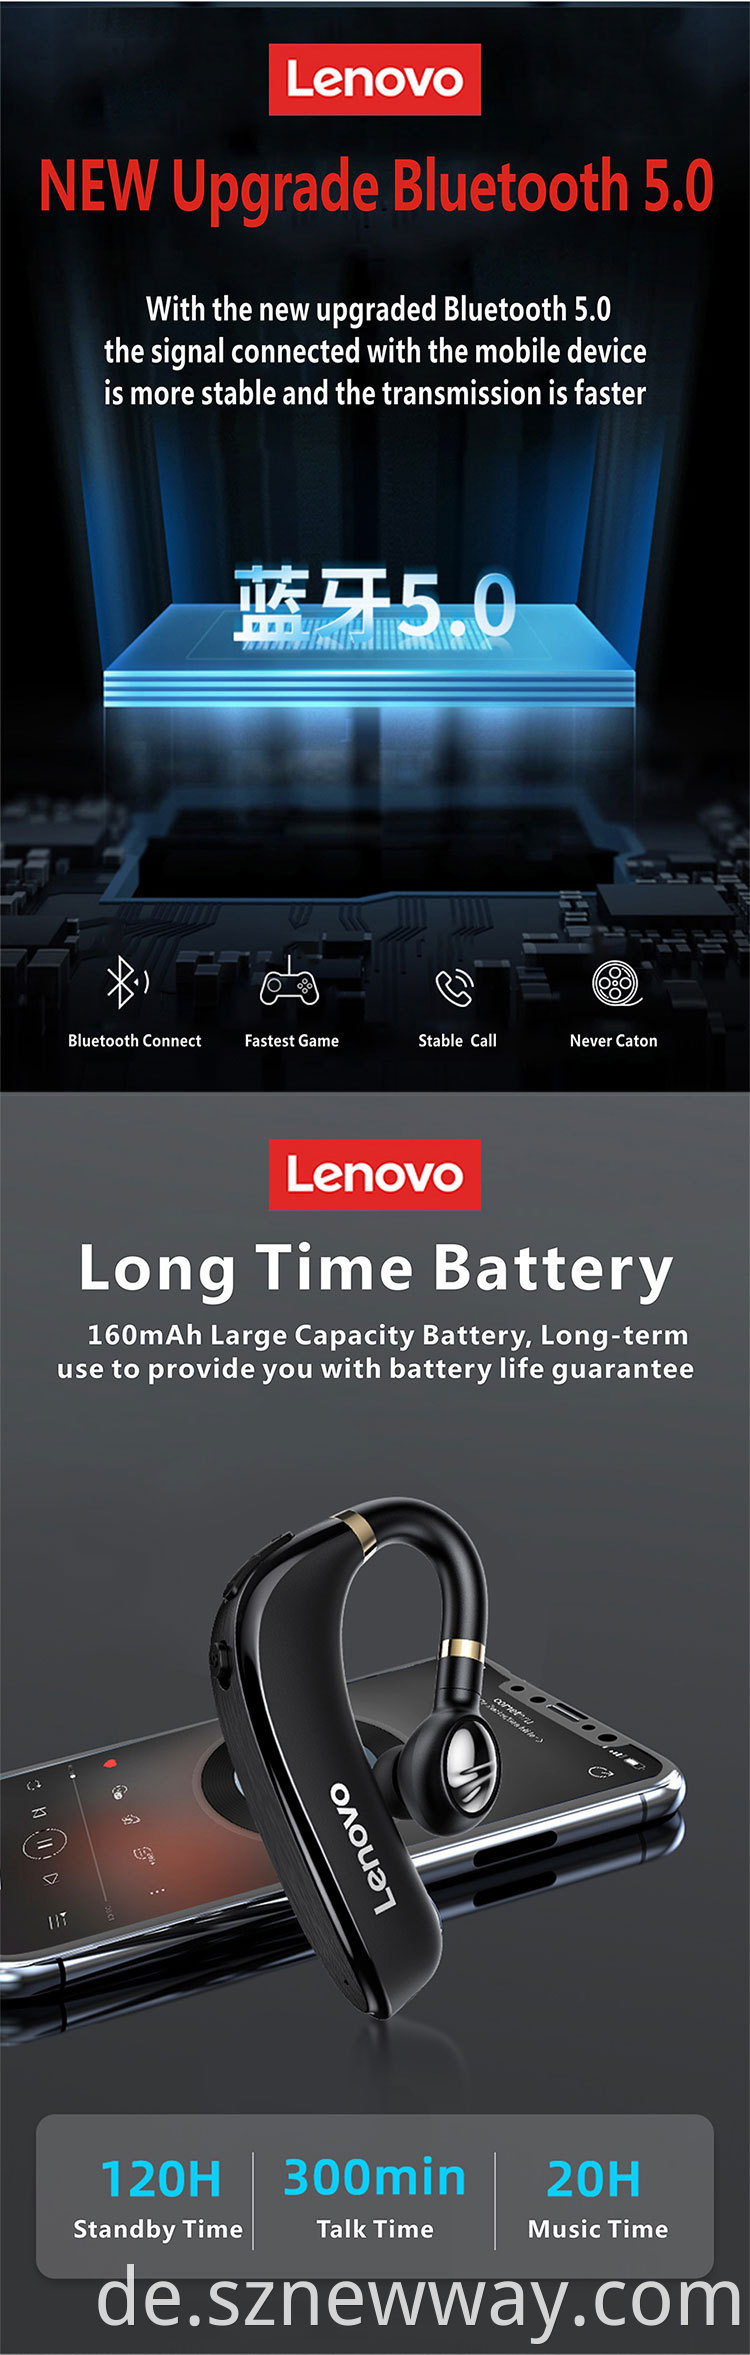 Lenovo Hx106 Headset